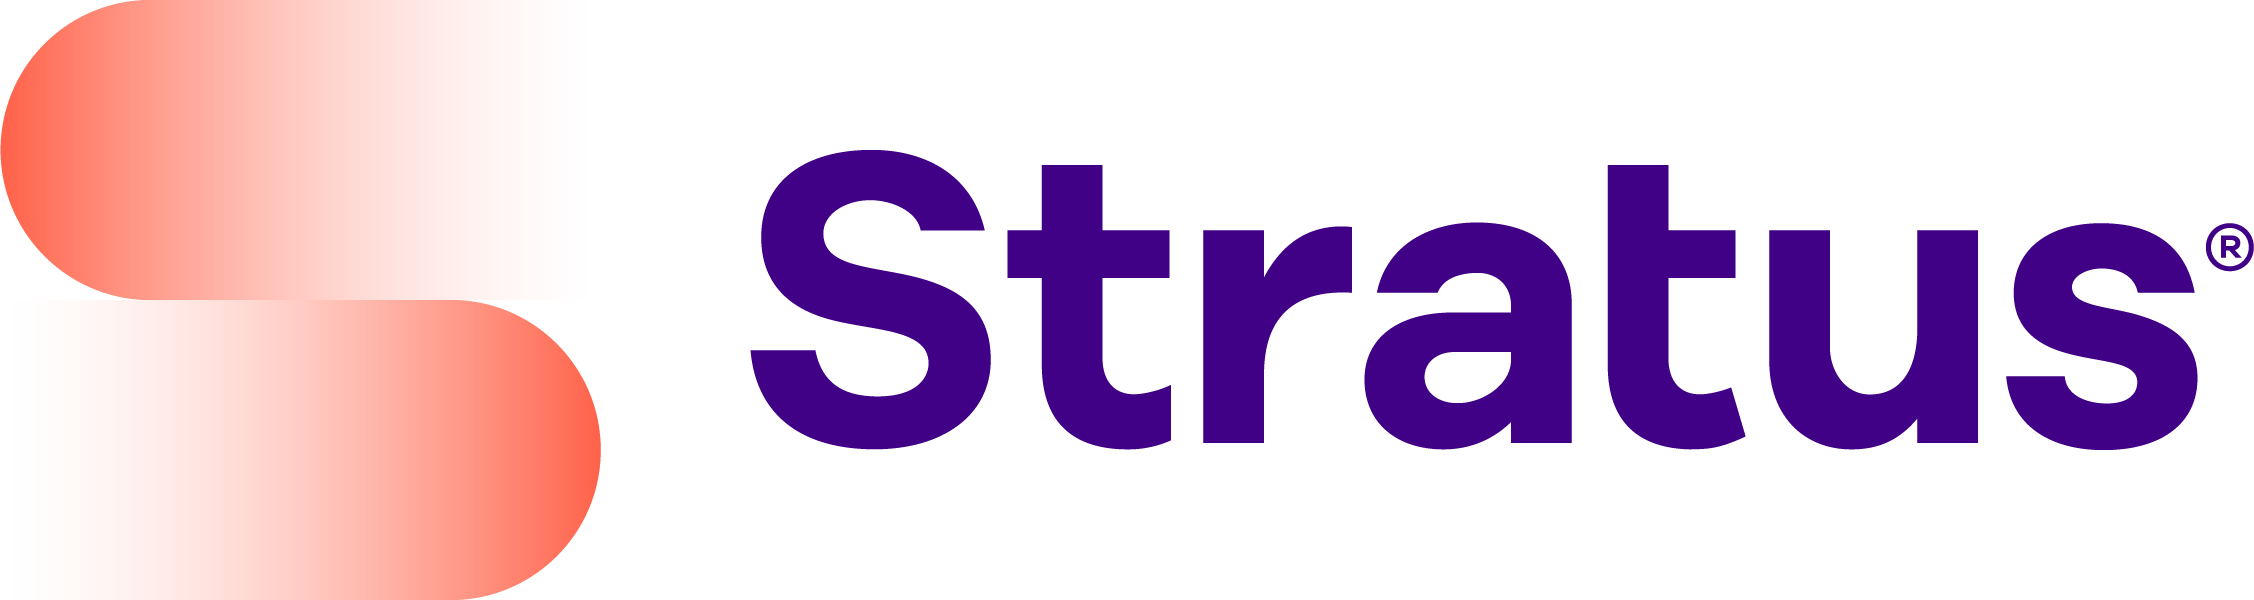 Picture of Stratus logo